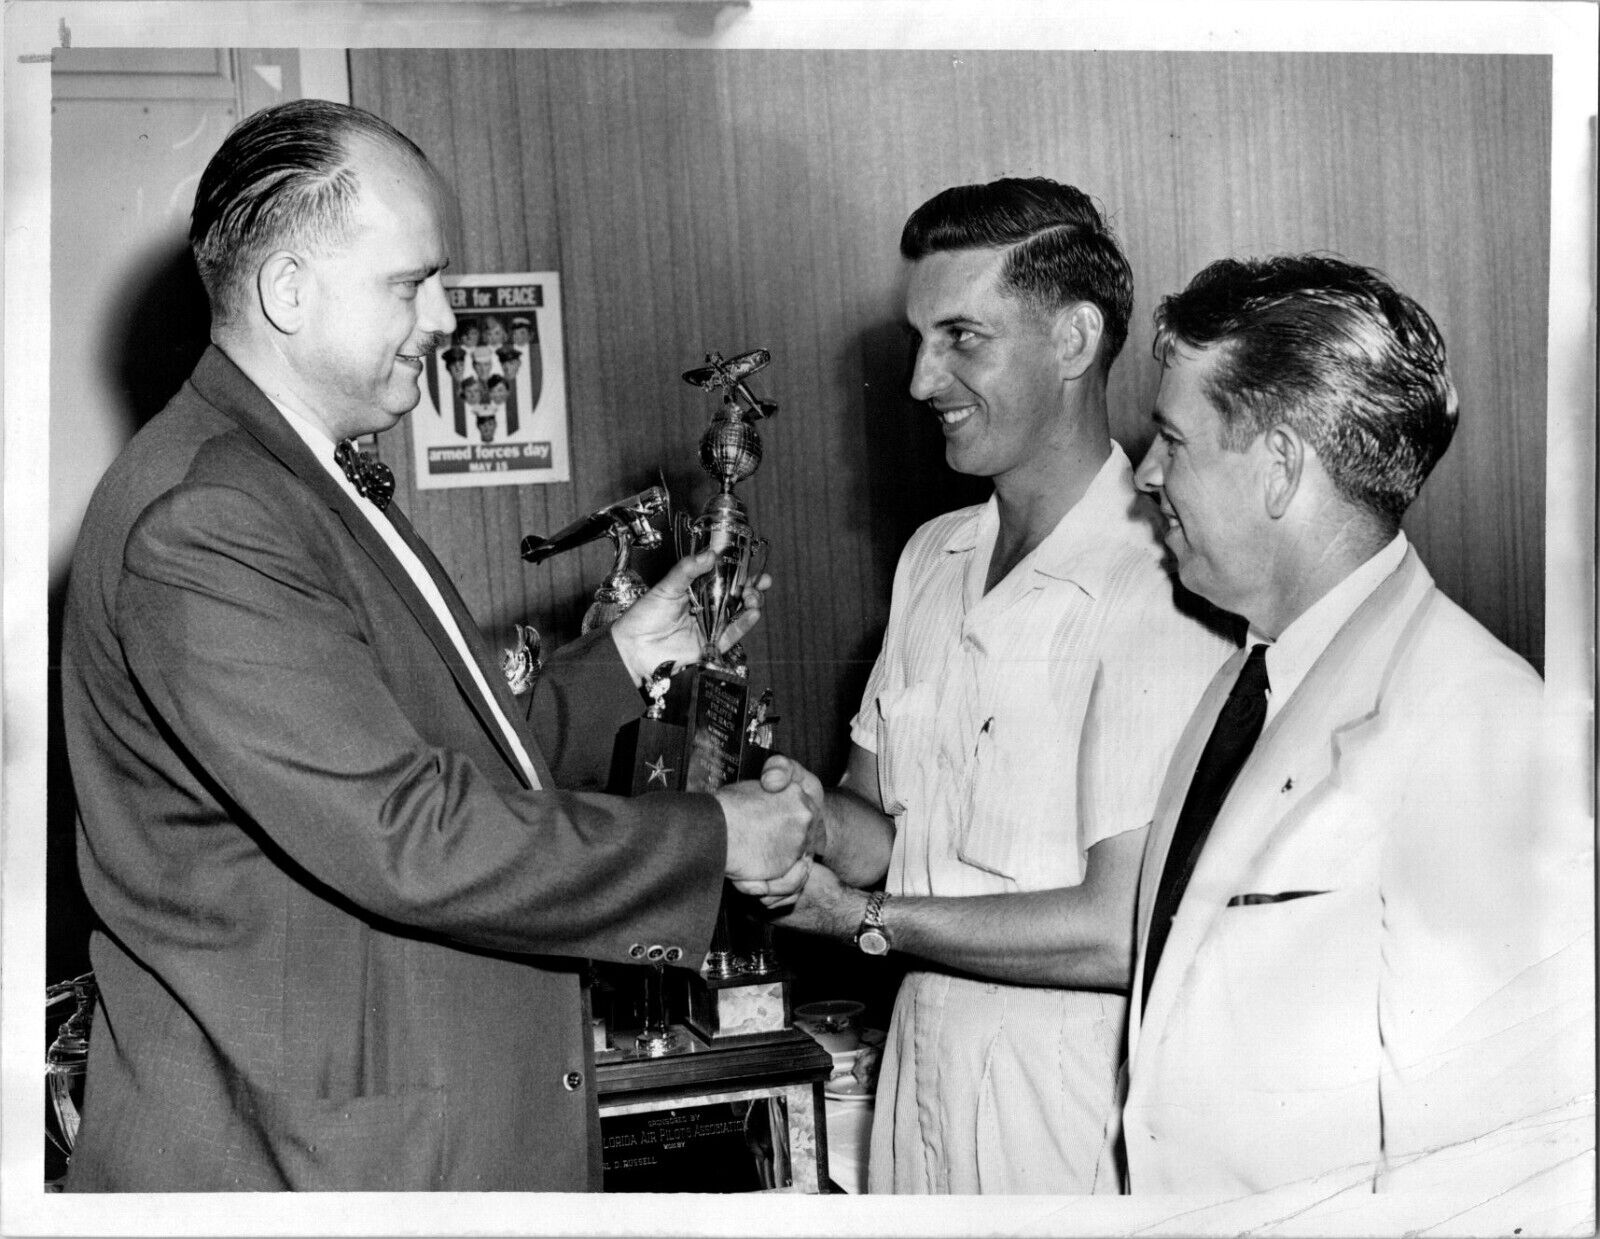 1954 Miami Winner of First All-Florida Sportsmen Pilots Race 7x8 press photo